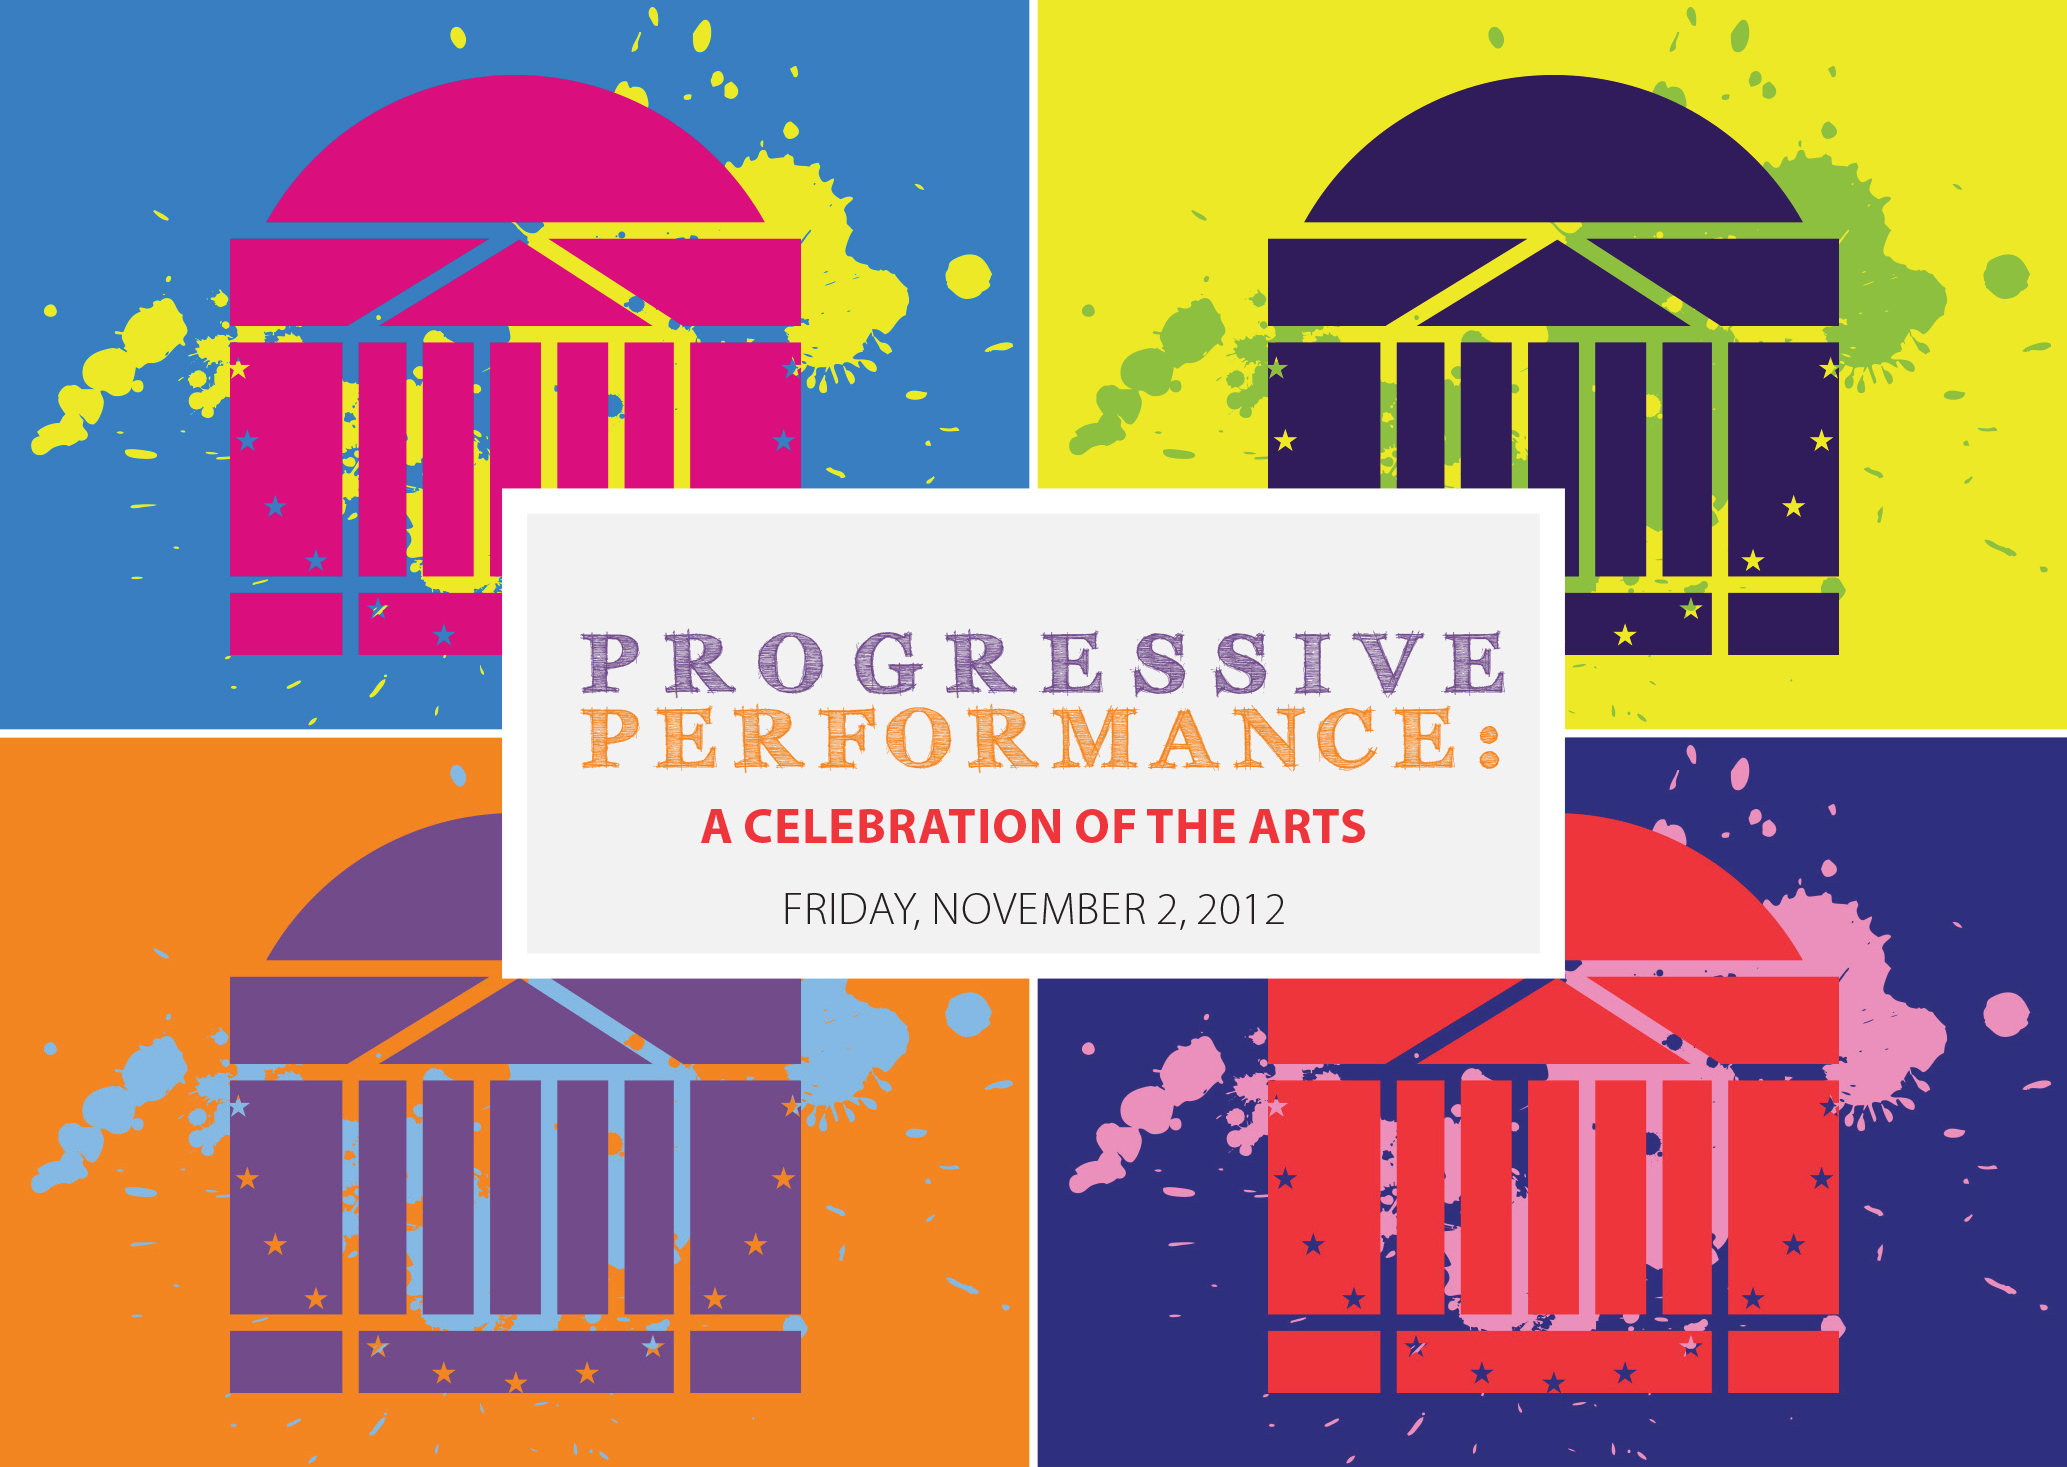 text reads: Progressive performance: A celebration of the arts Friday November, 2 2012